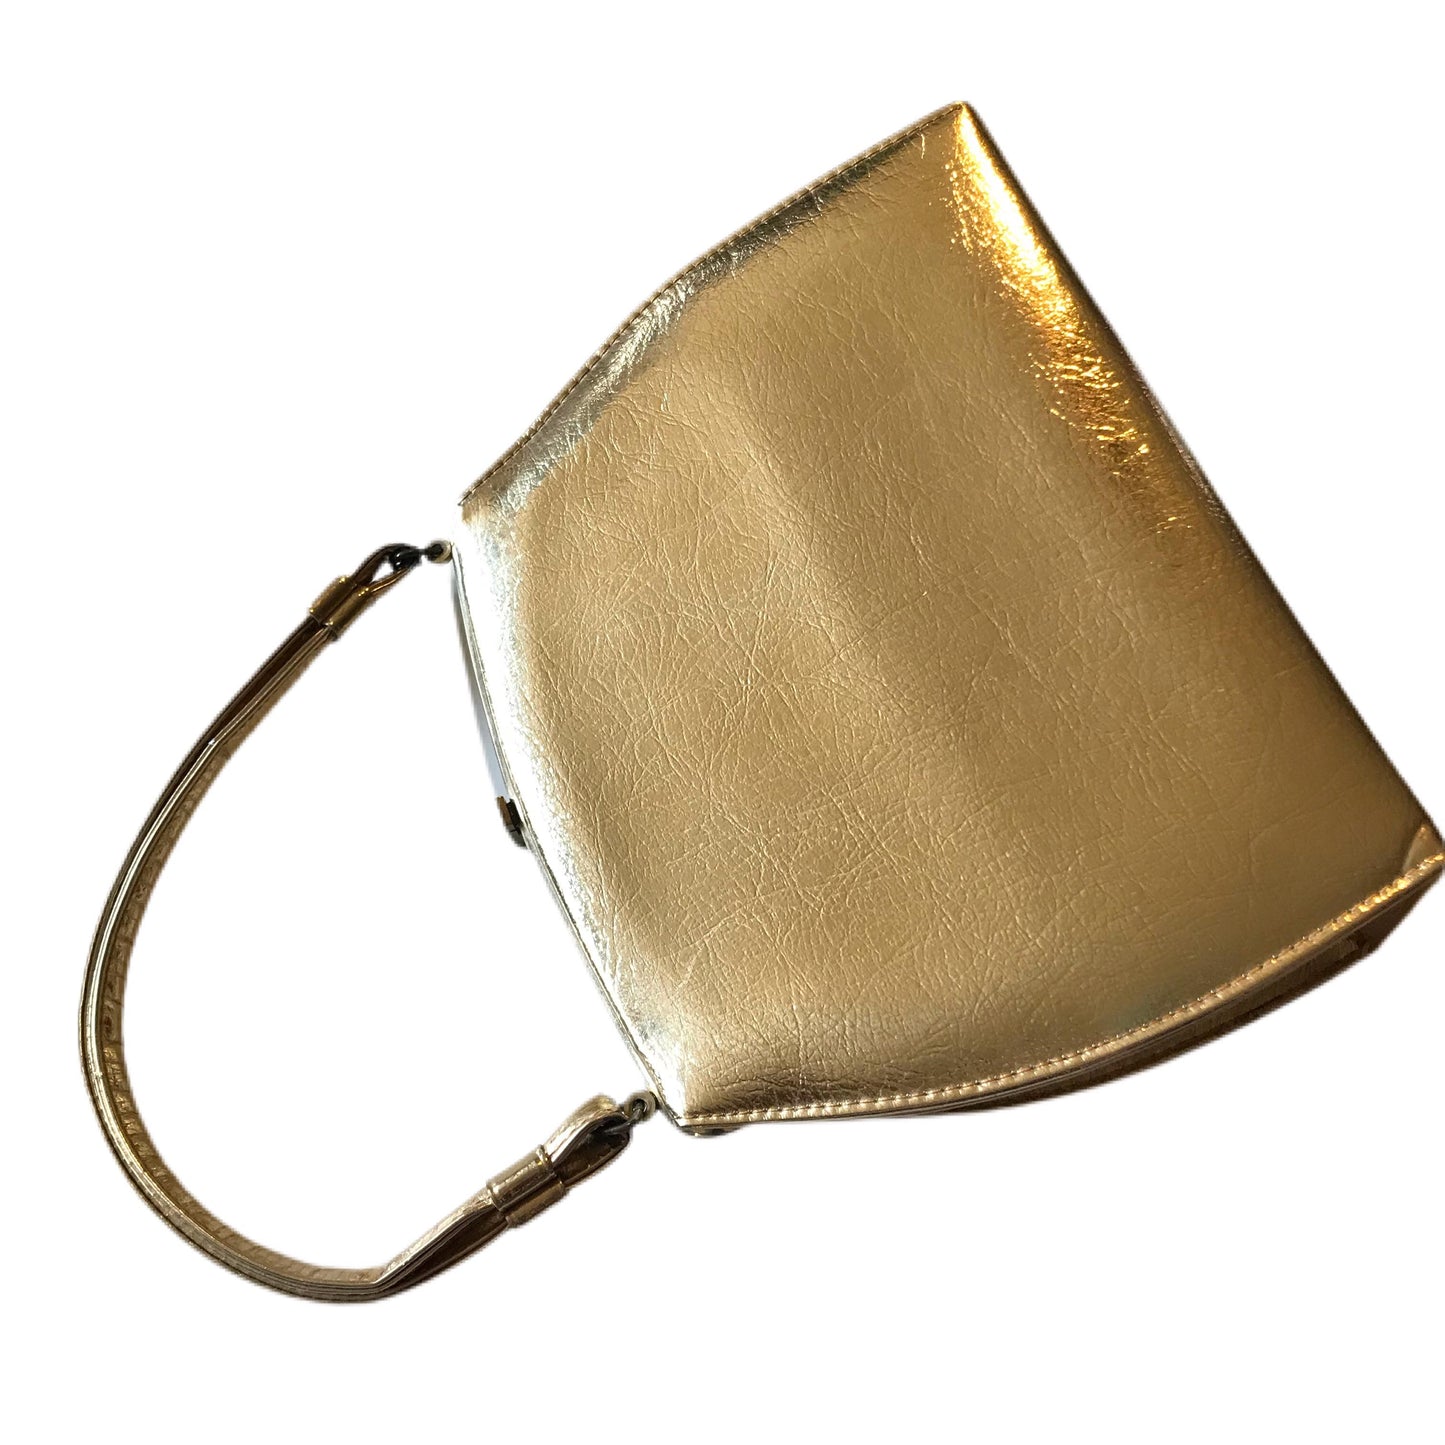 Metallic Gold Crinkled Vinyl Top Handle Handbag circa 1960s